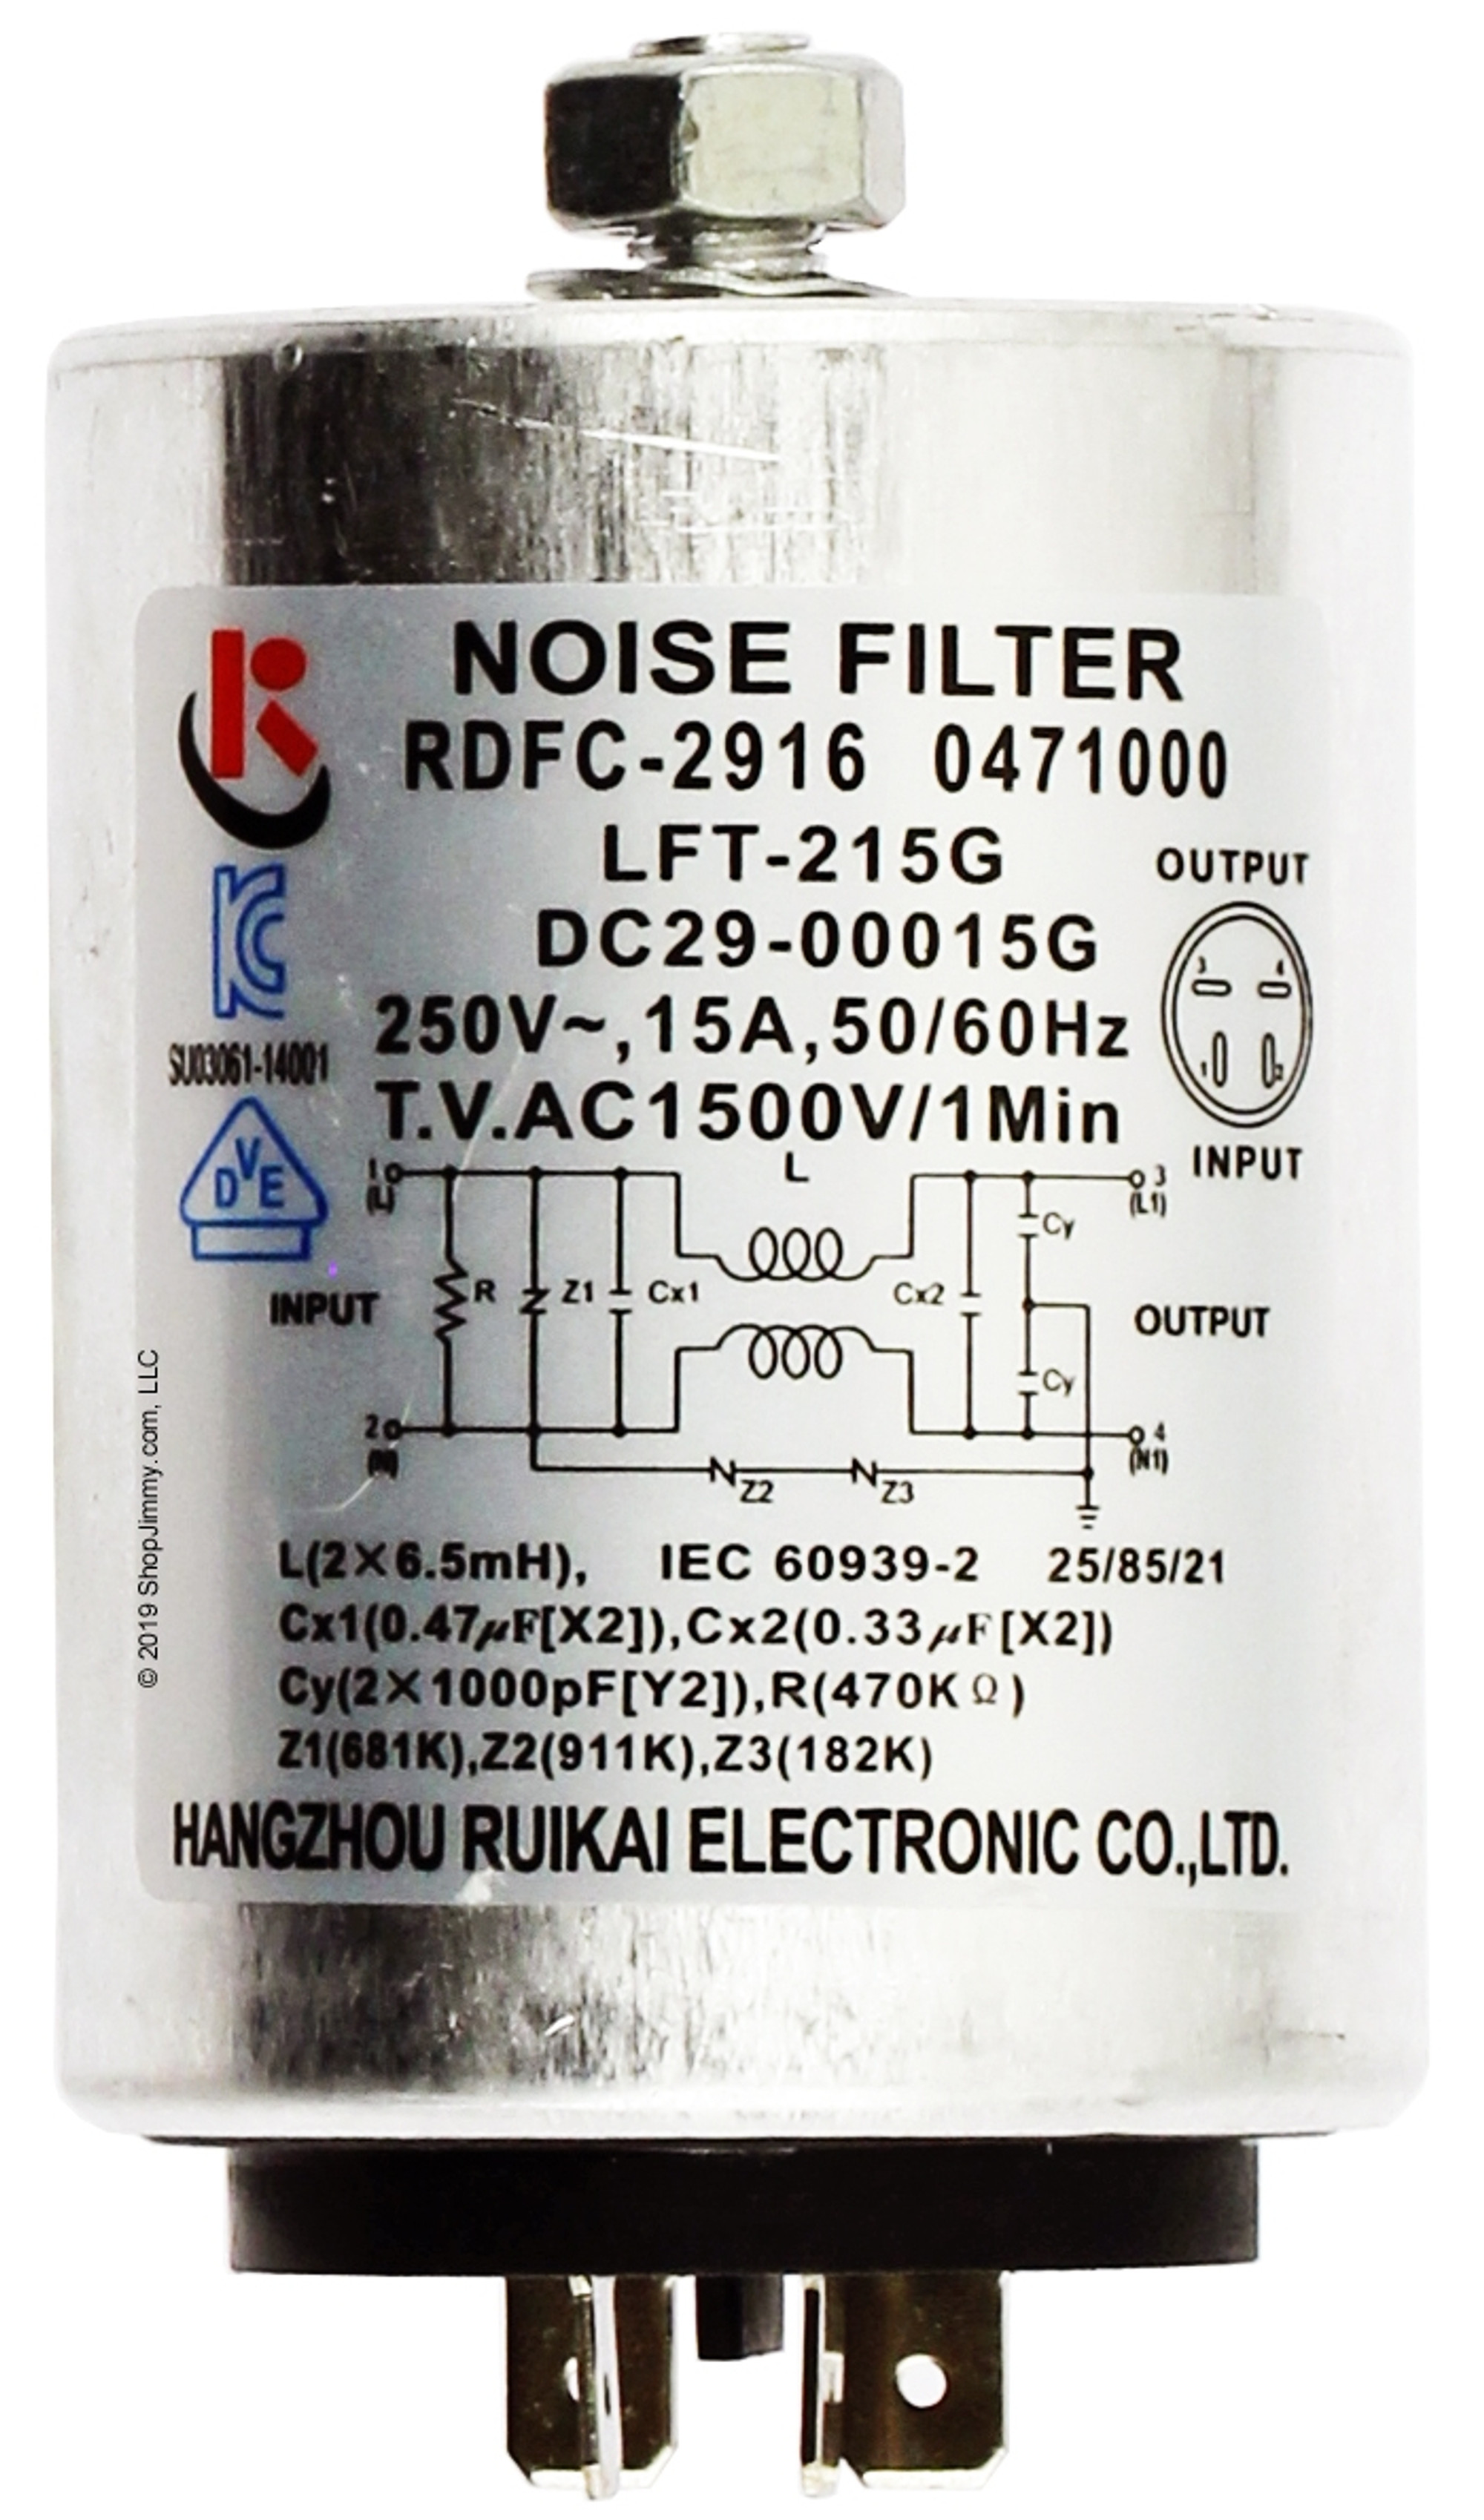 Samsung Washer Noise Filter DC29-00013B LFT-215G-1. 20% OFF SALE